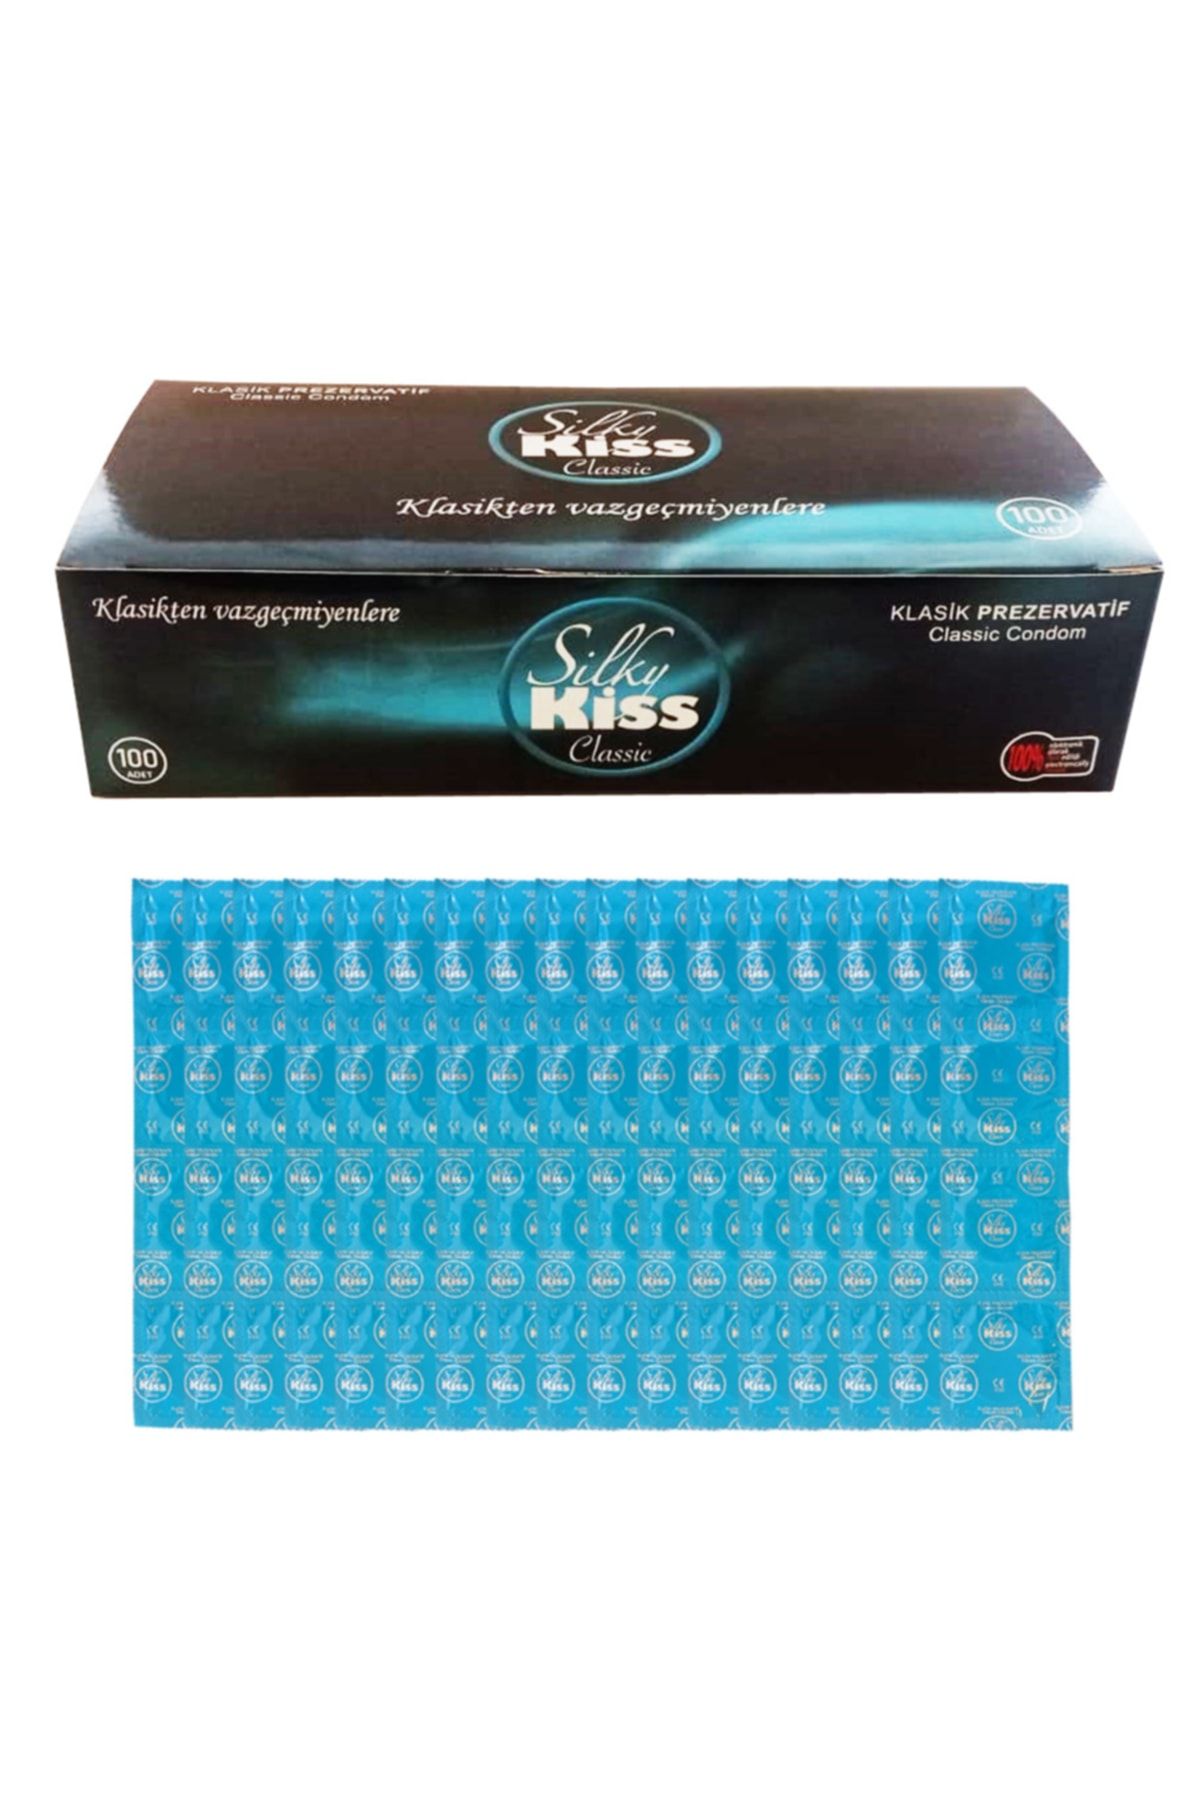 Silky Kiss Klasik Prezervatif 100 Adet Paket